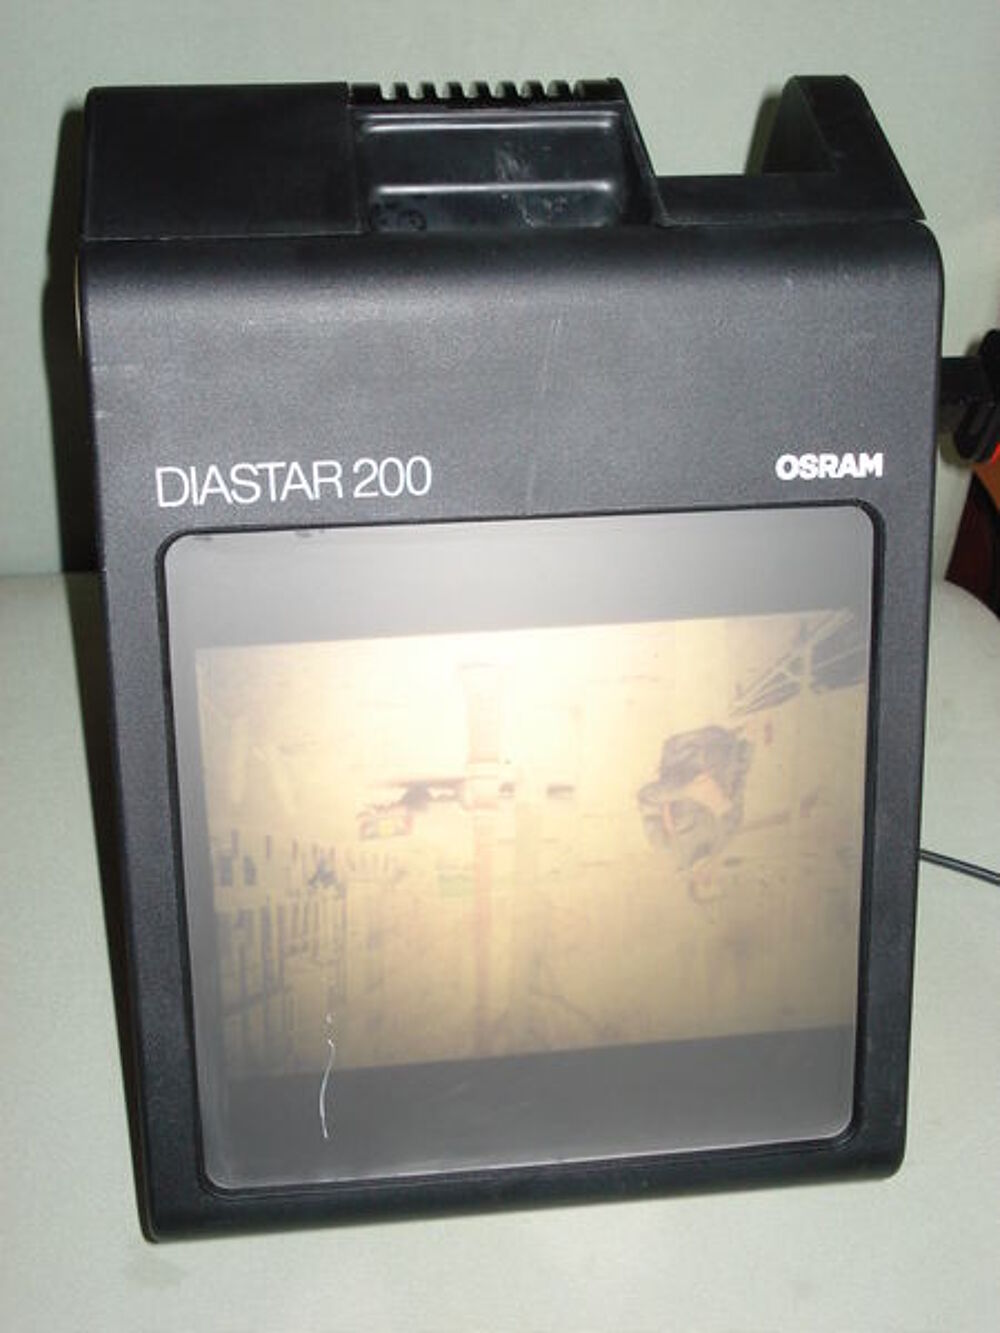 Projecteur DIASTAR 200 OSRAM visionneuse de diapositives Photos/Video/TV